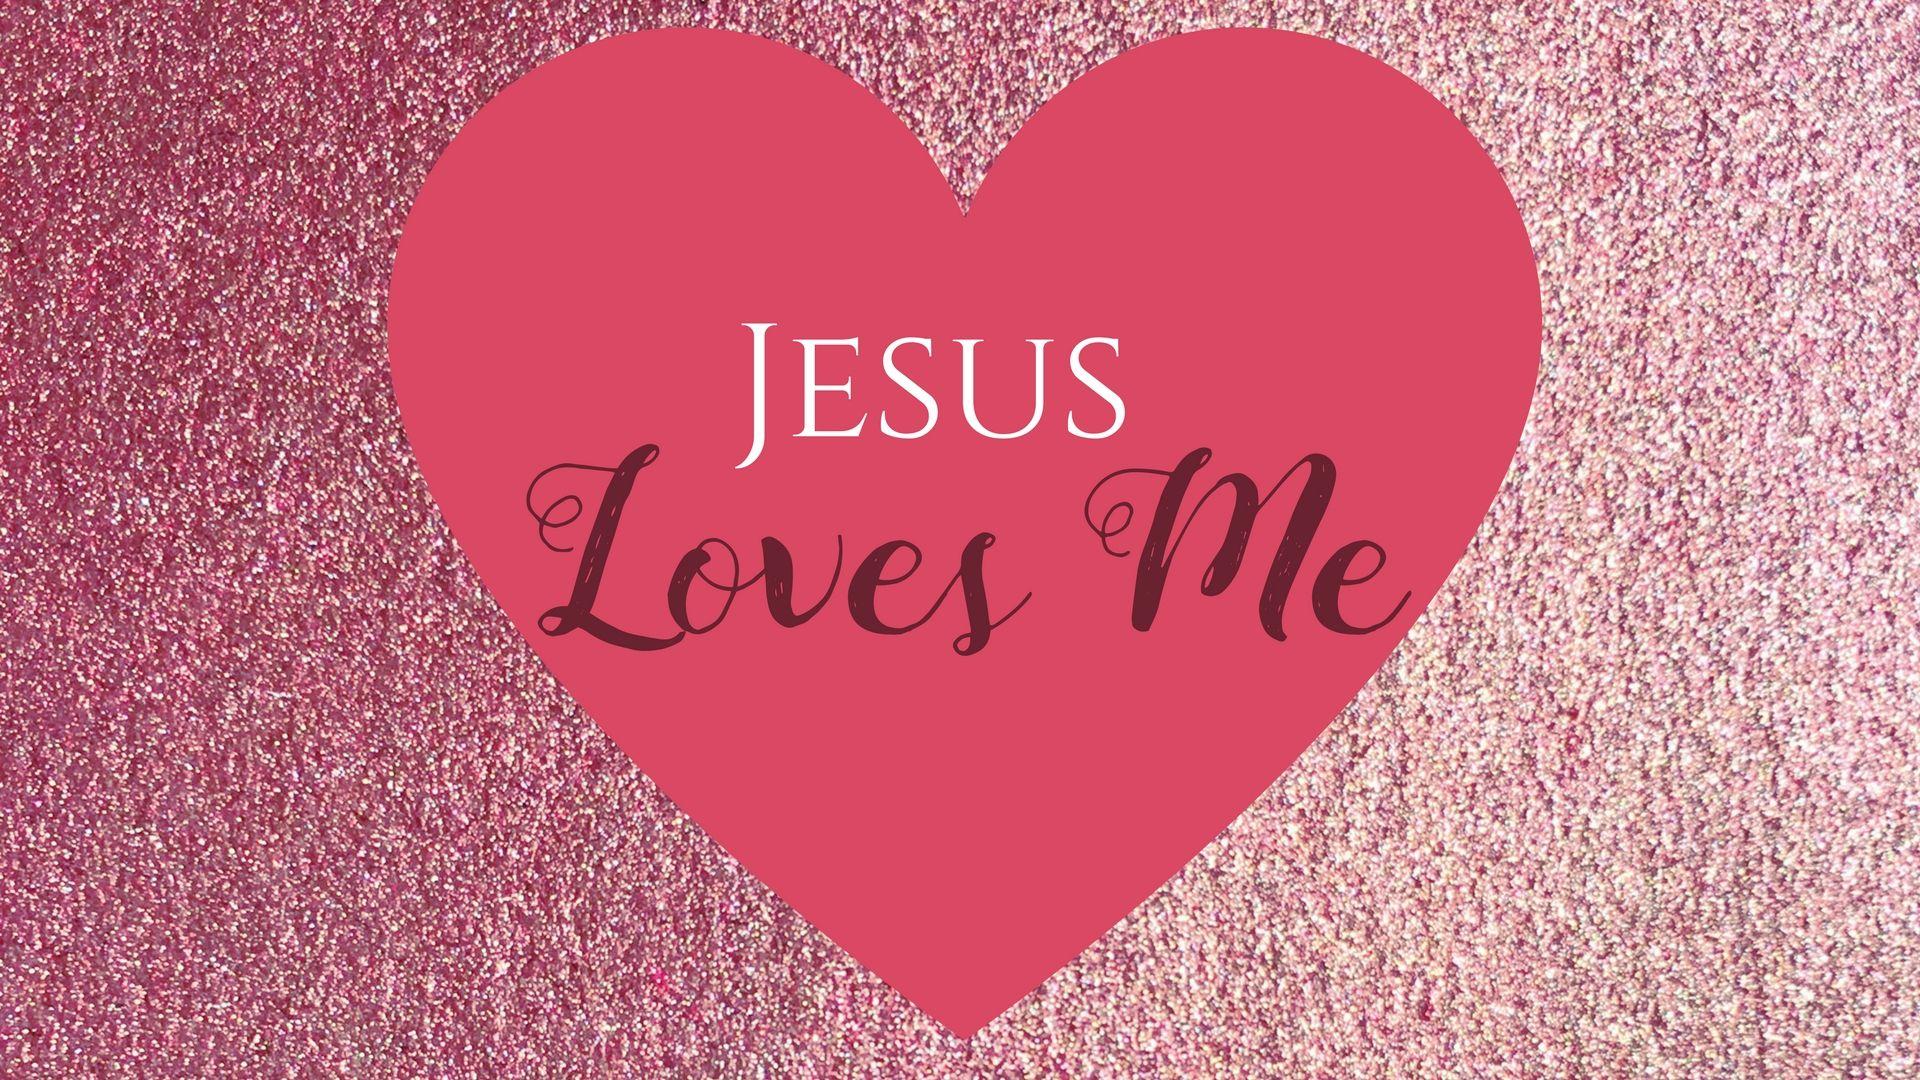 970 Jesus Loves Me Images, Stock Photos & Vectors | Shutterstock